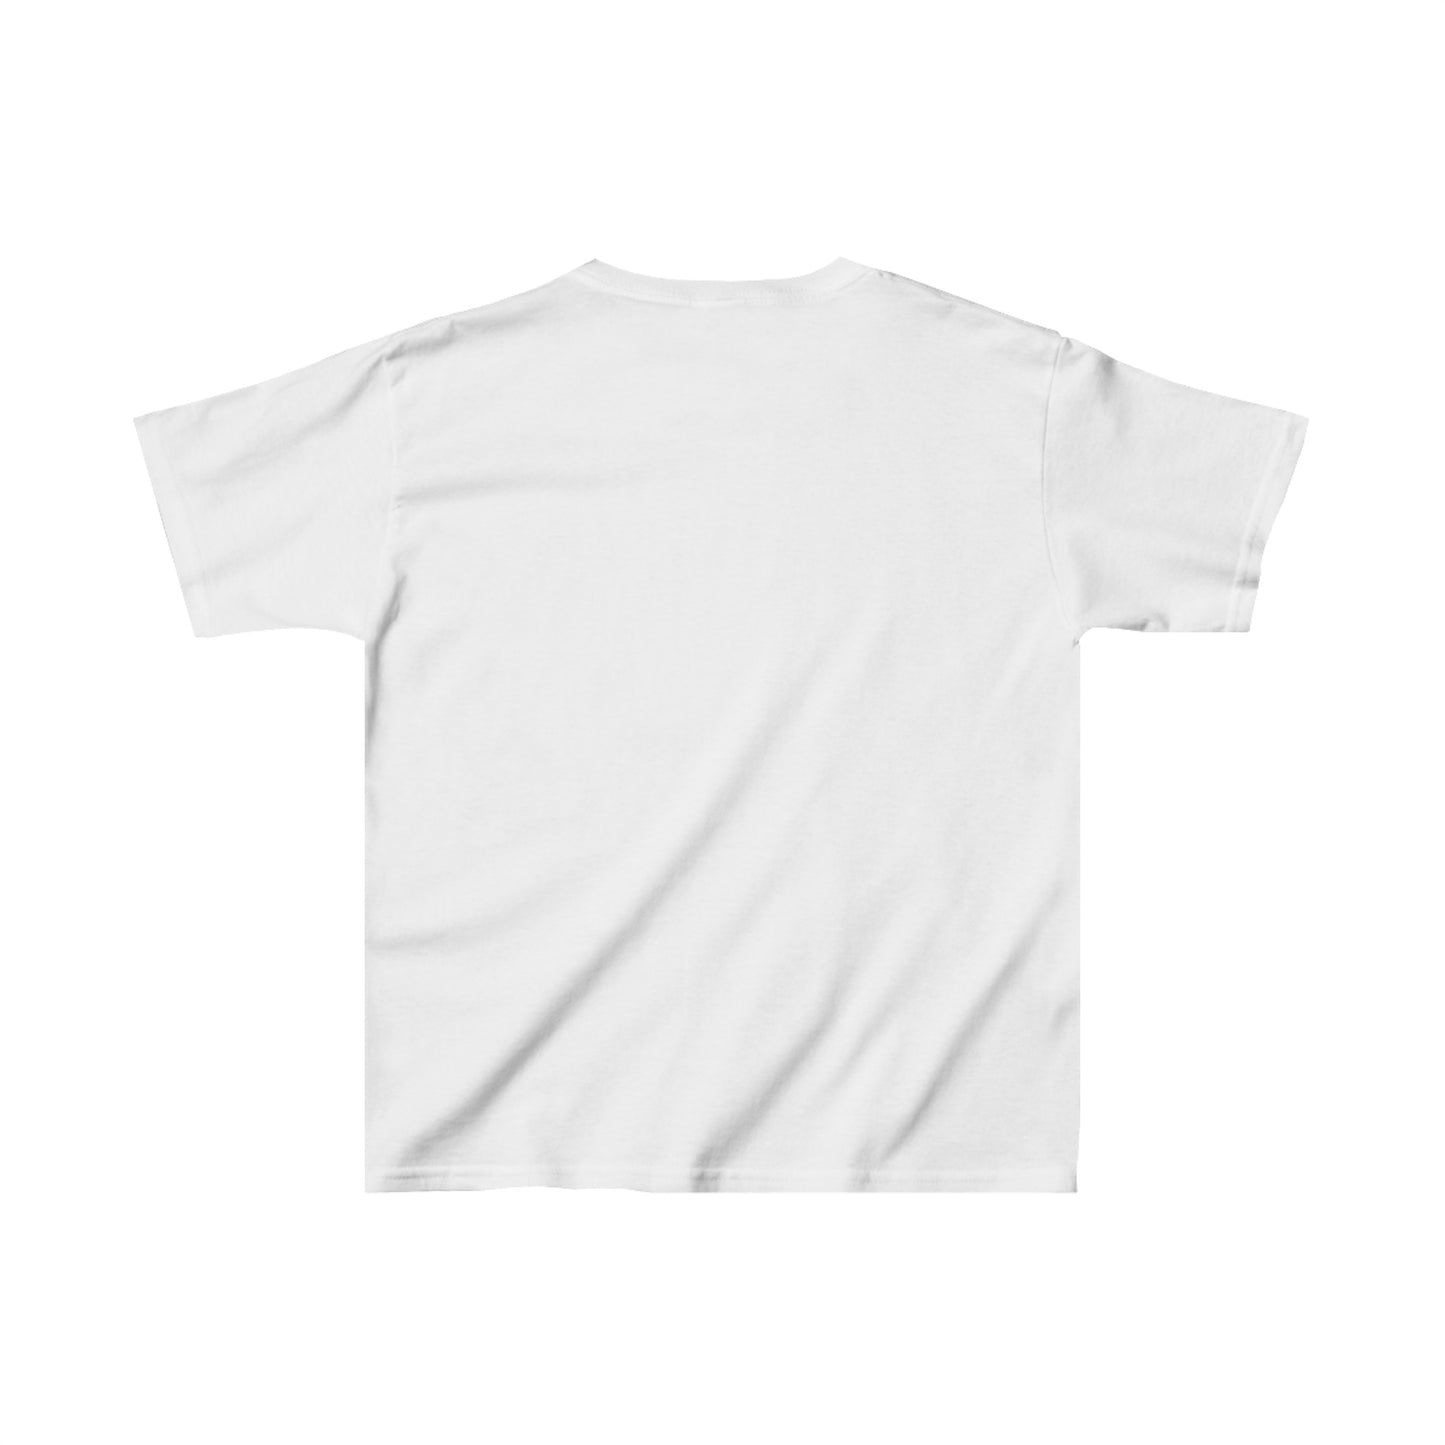 Family - Classic Brooklyn Tech Logo - Kids Heavy Cotton™ T-Shirt